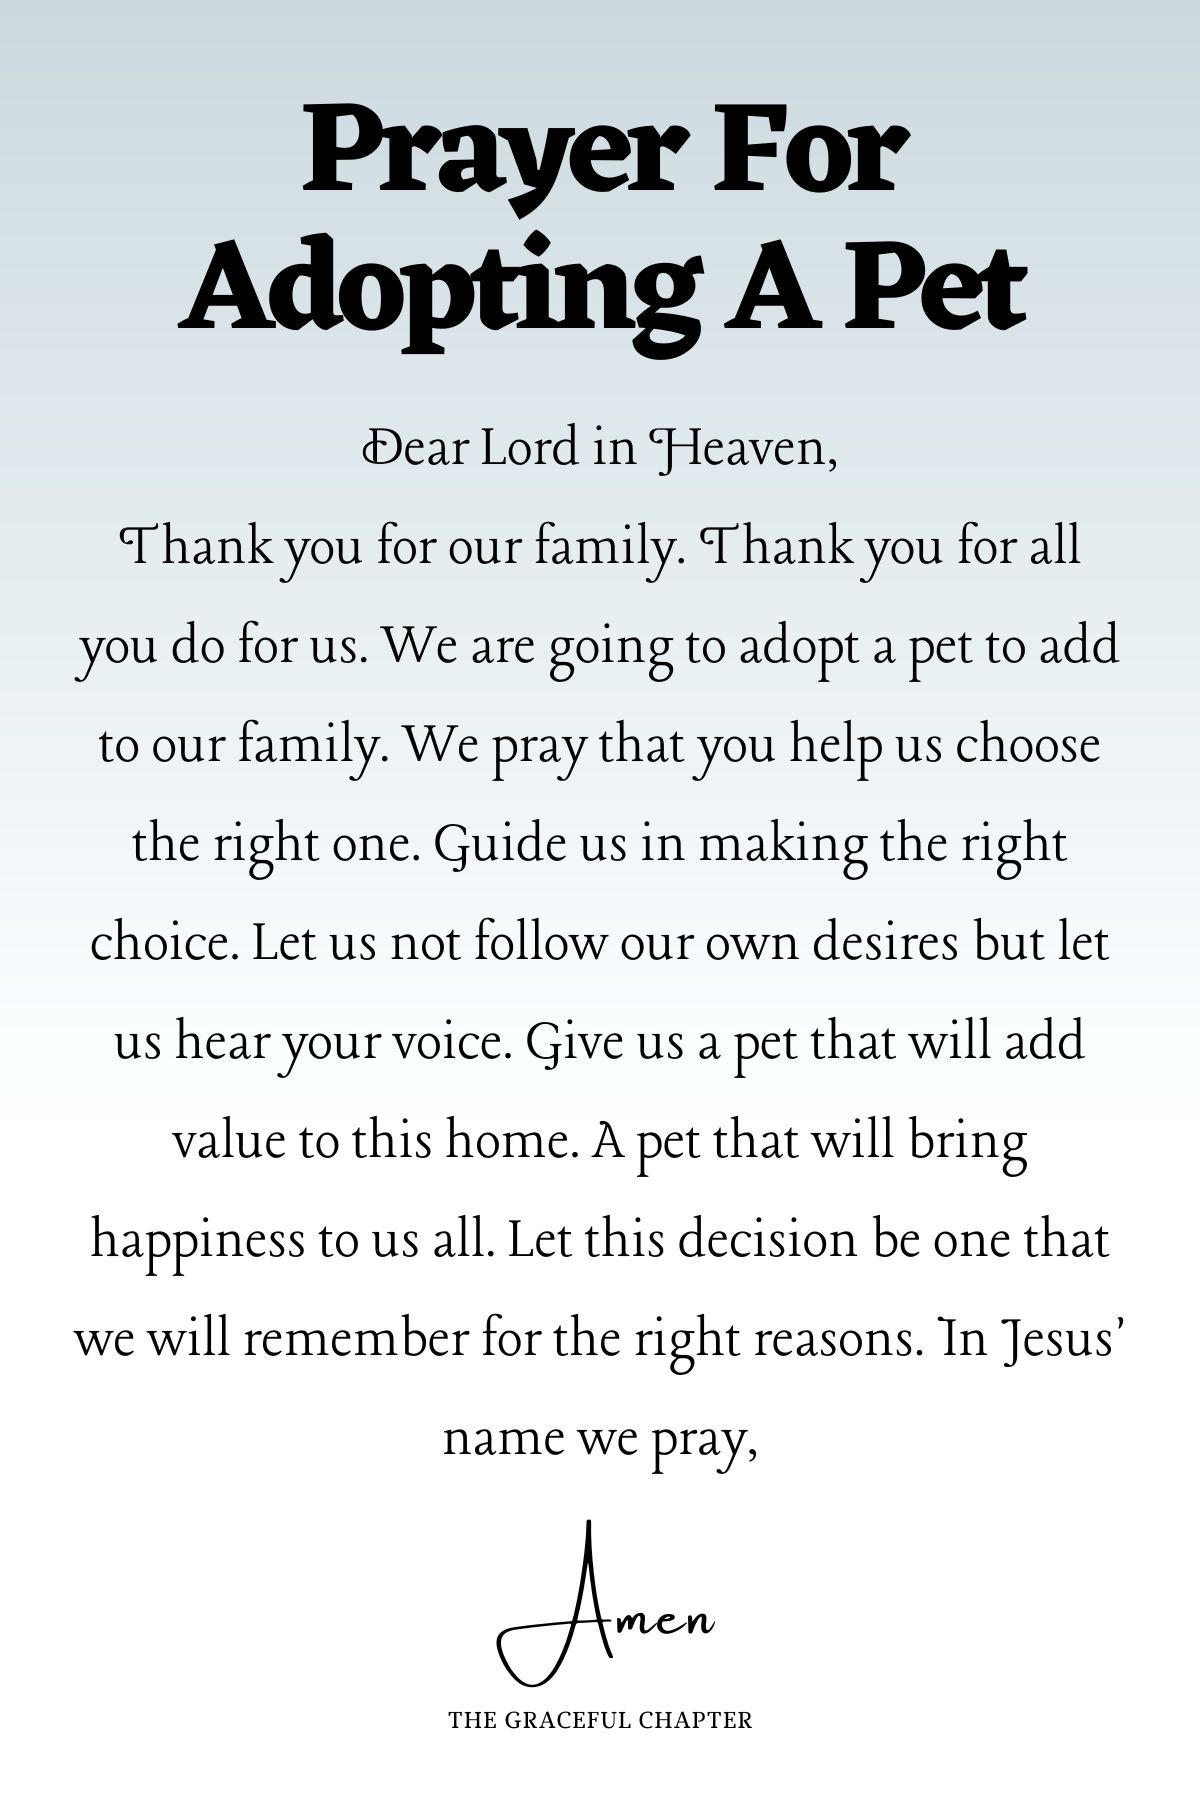 Prayer for adopting a pet